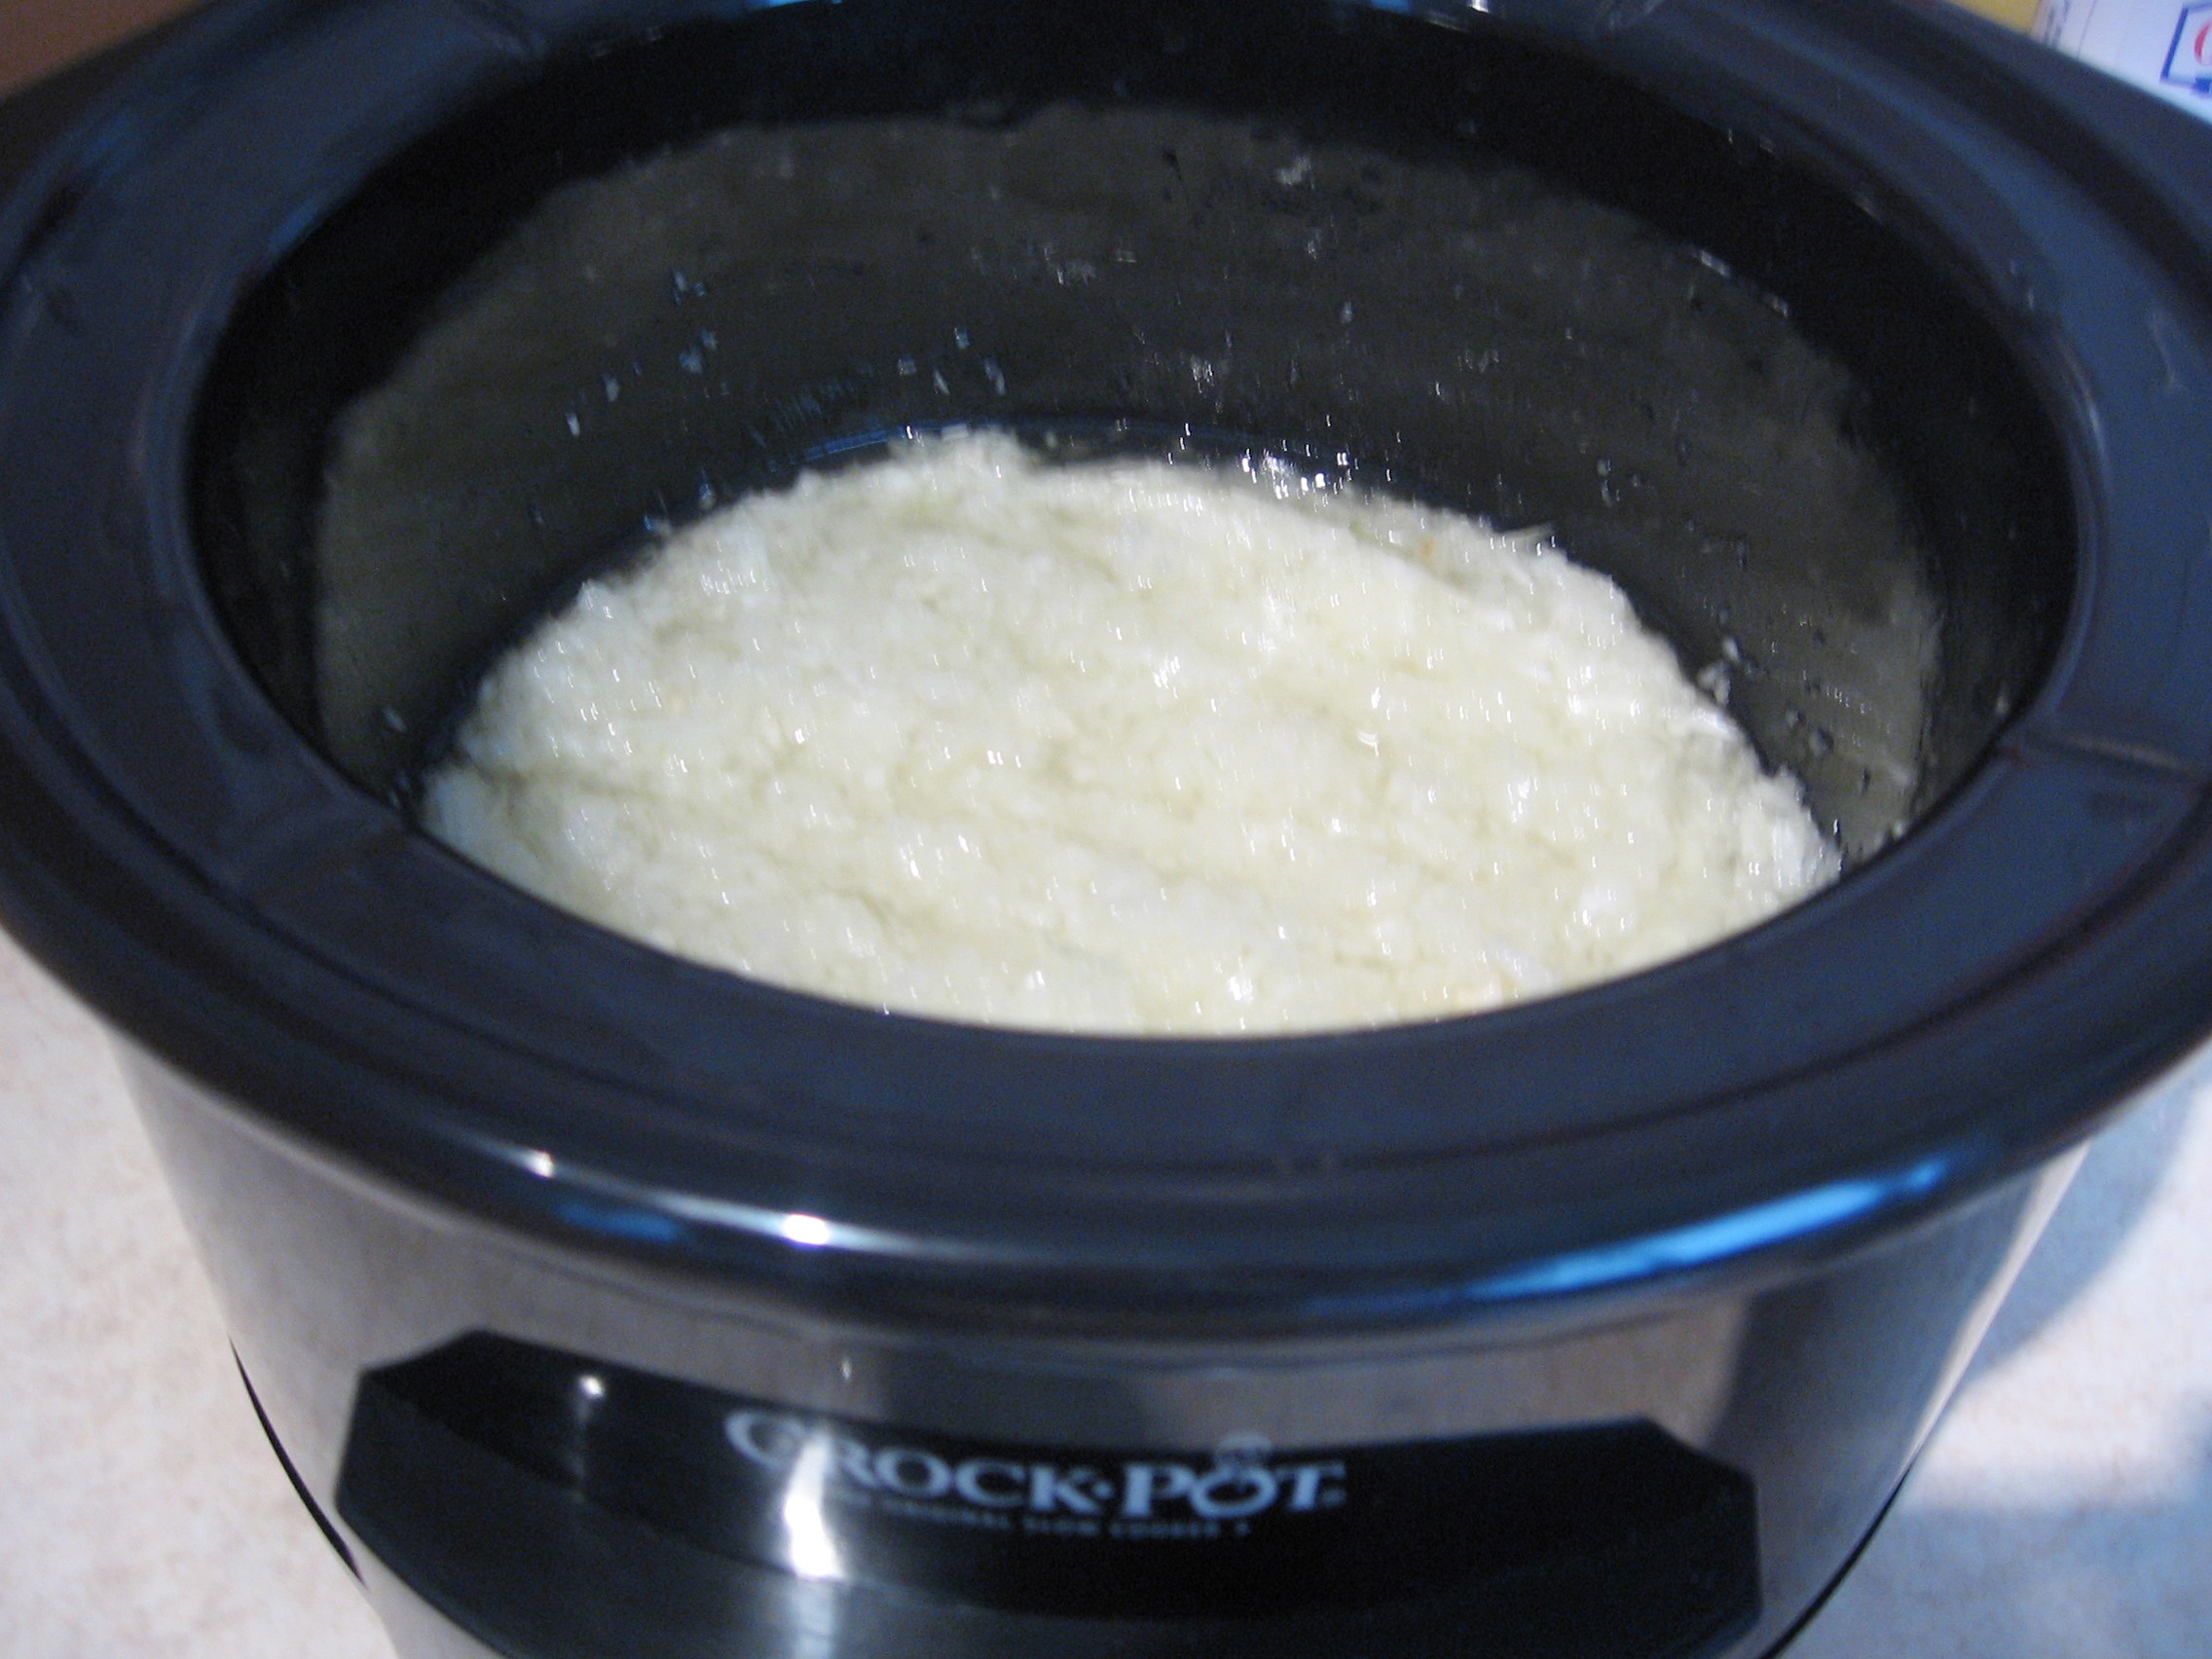 Zacusca, reteta clasica la slow cooker Crock-Pot 4,7 L